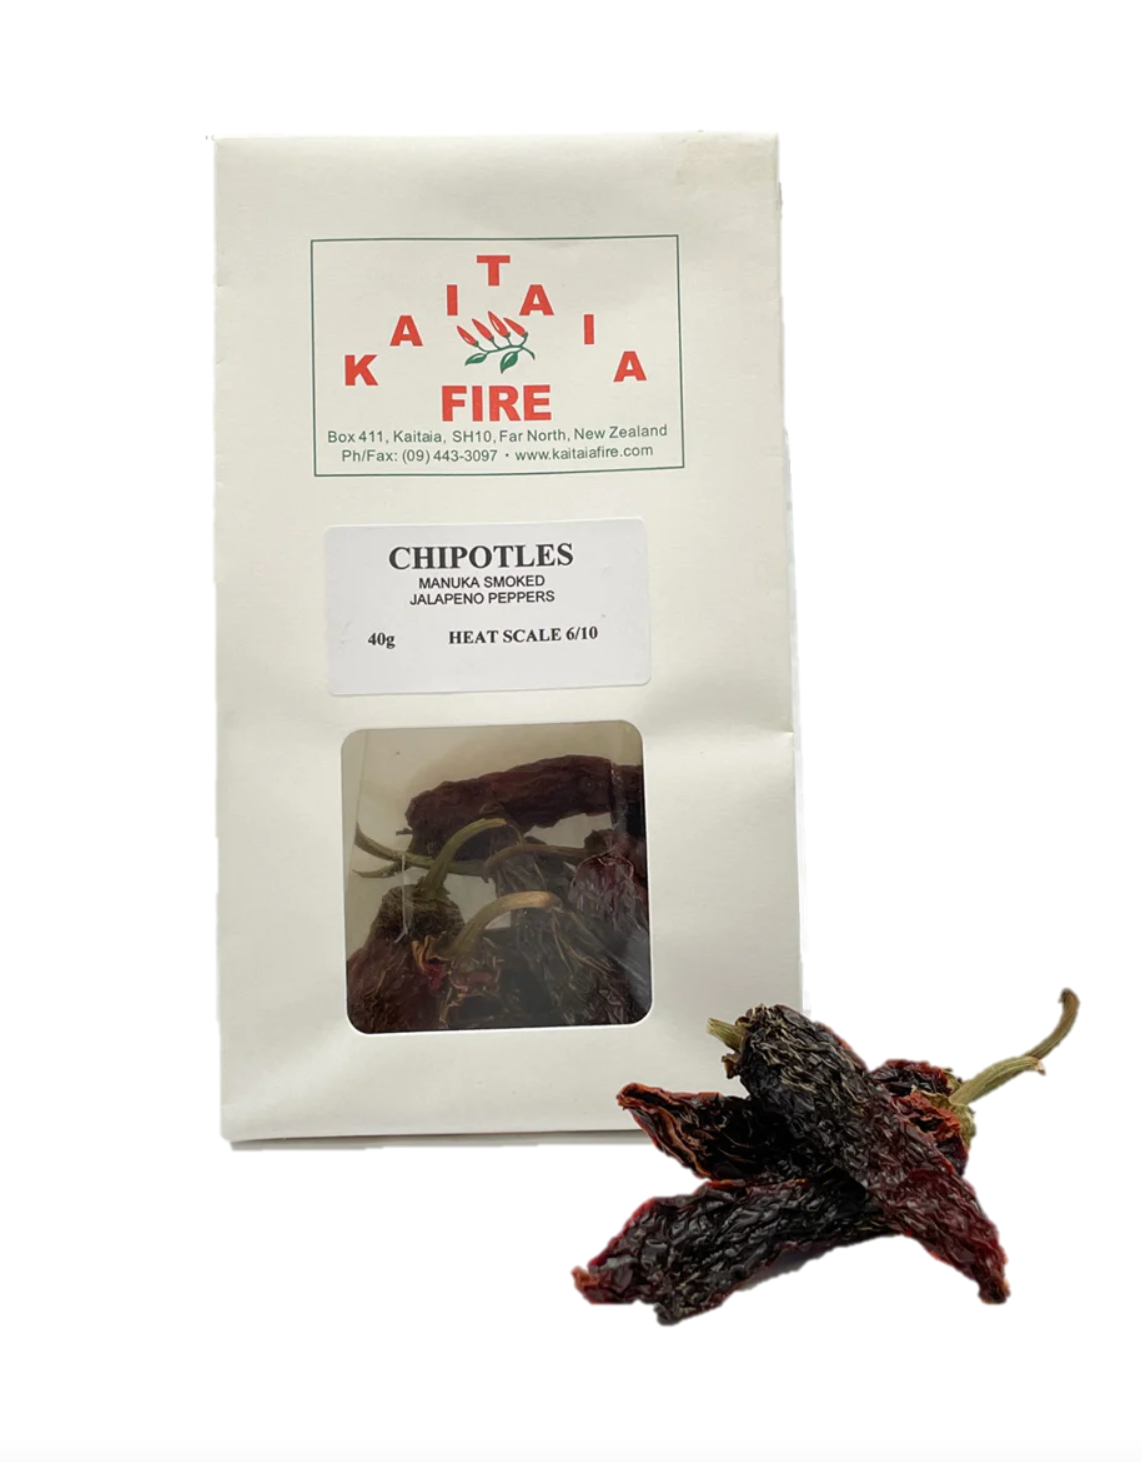 Dried Chipotles - Manuka Smoked Jalapeno Peppers 40g - Kaitaia Fire